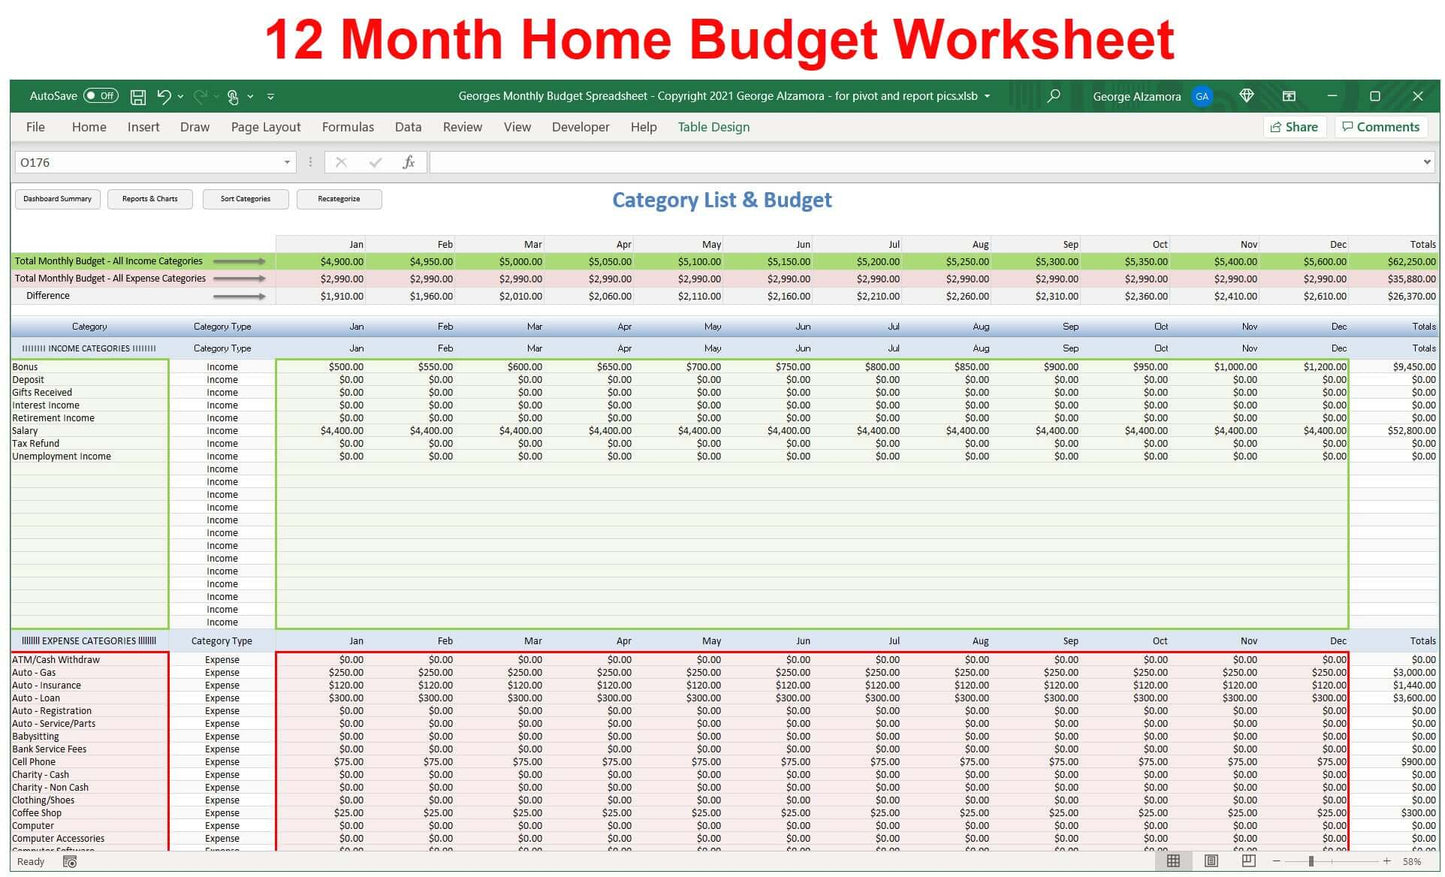 12 month home budget worksheet